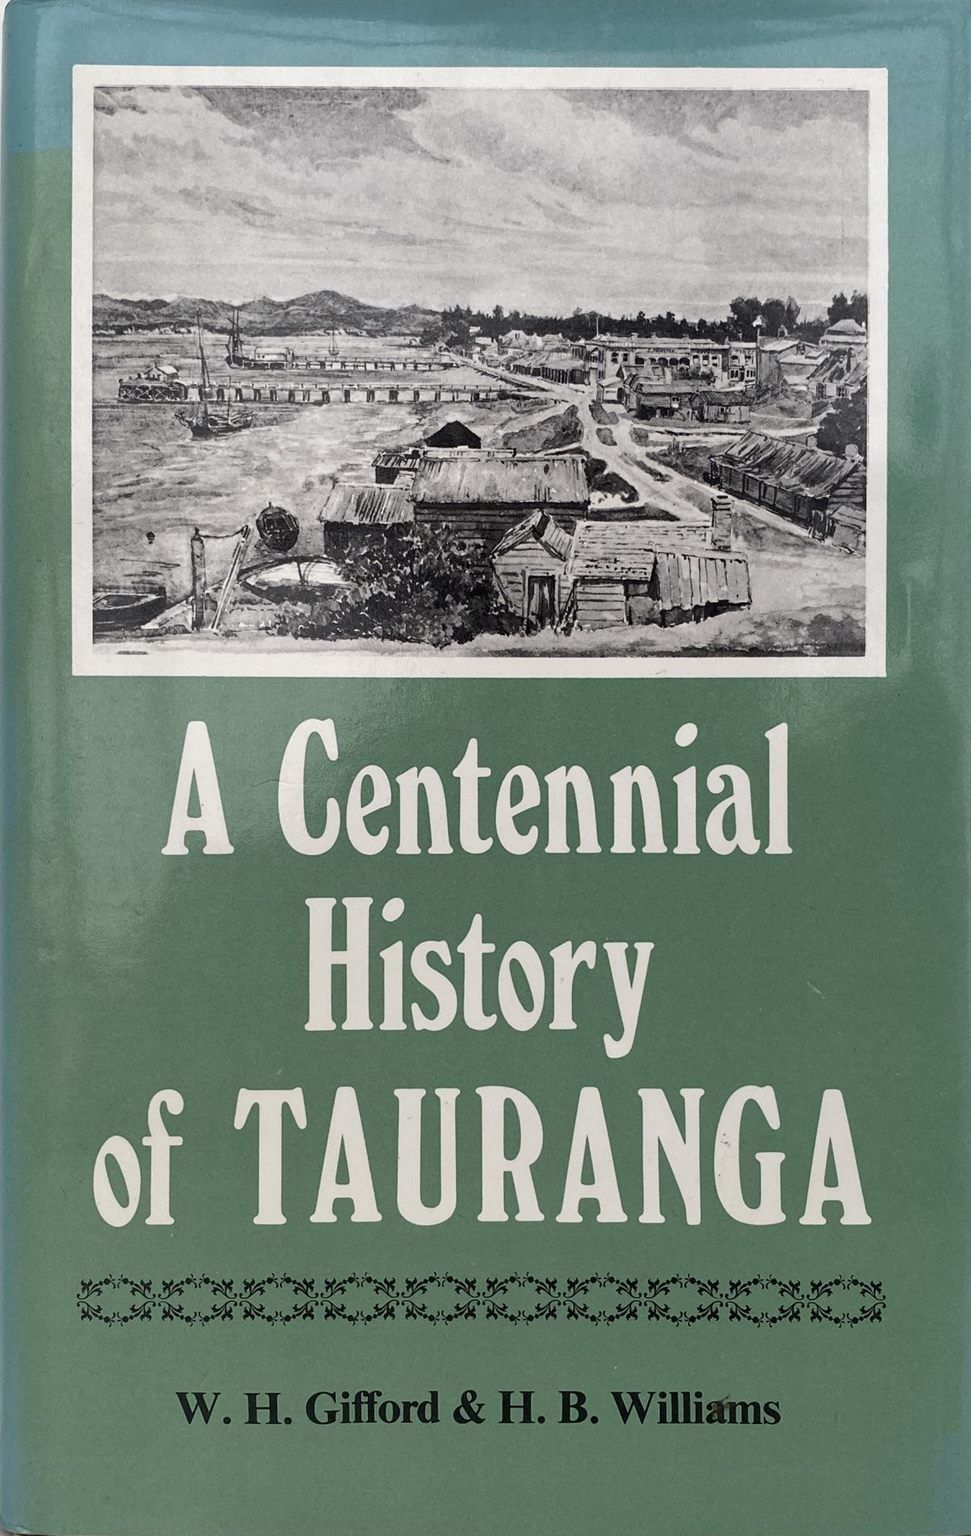 A Centennial History of TAURANGA